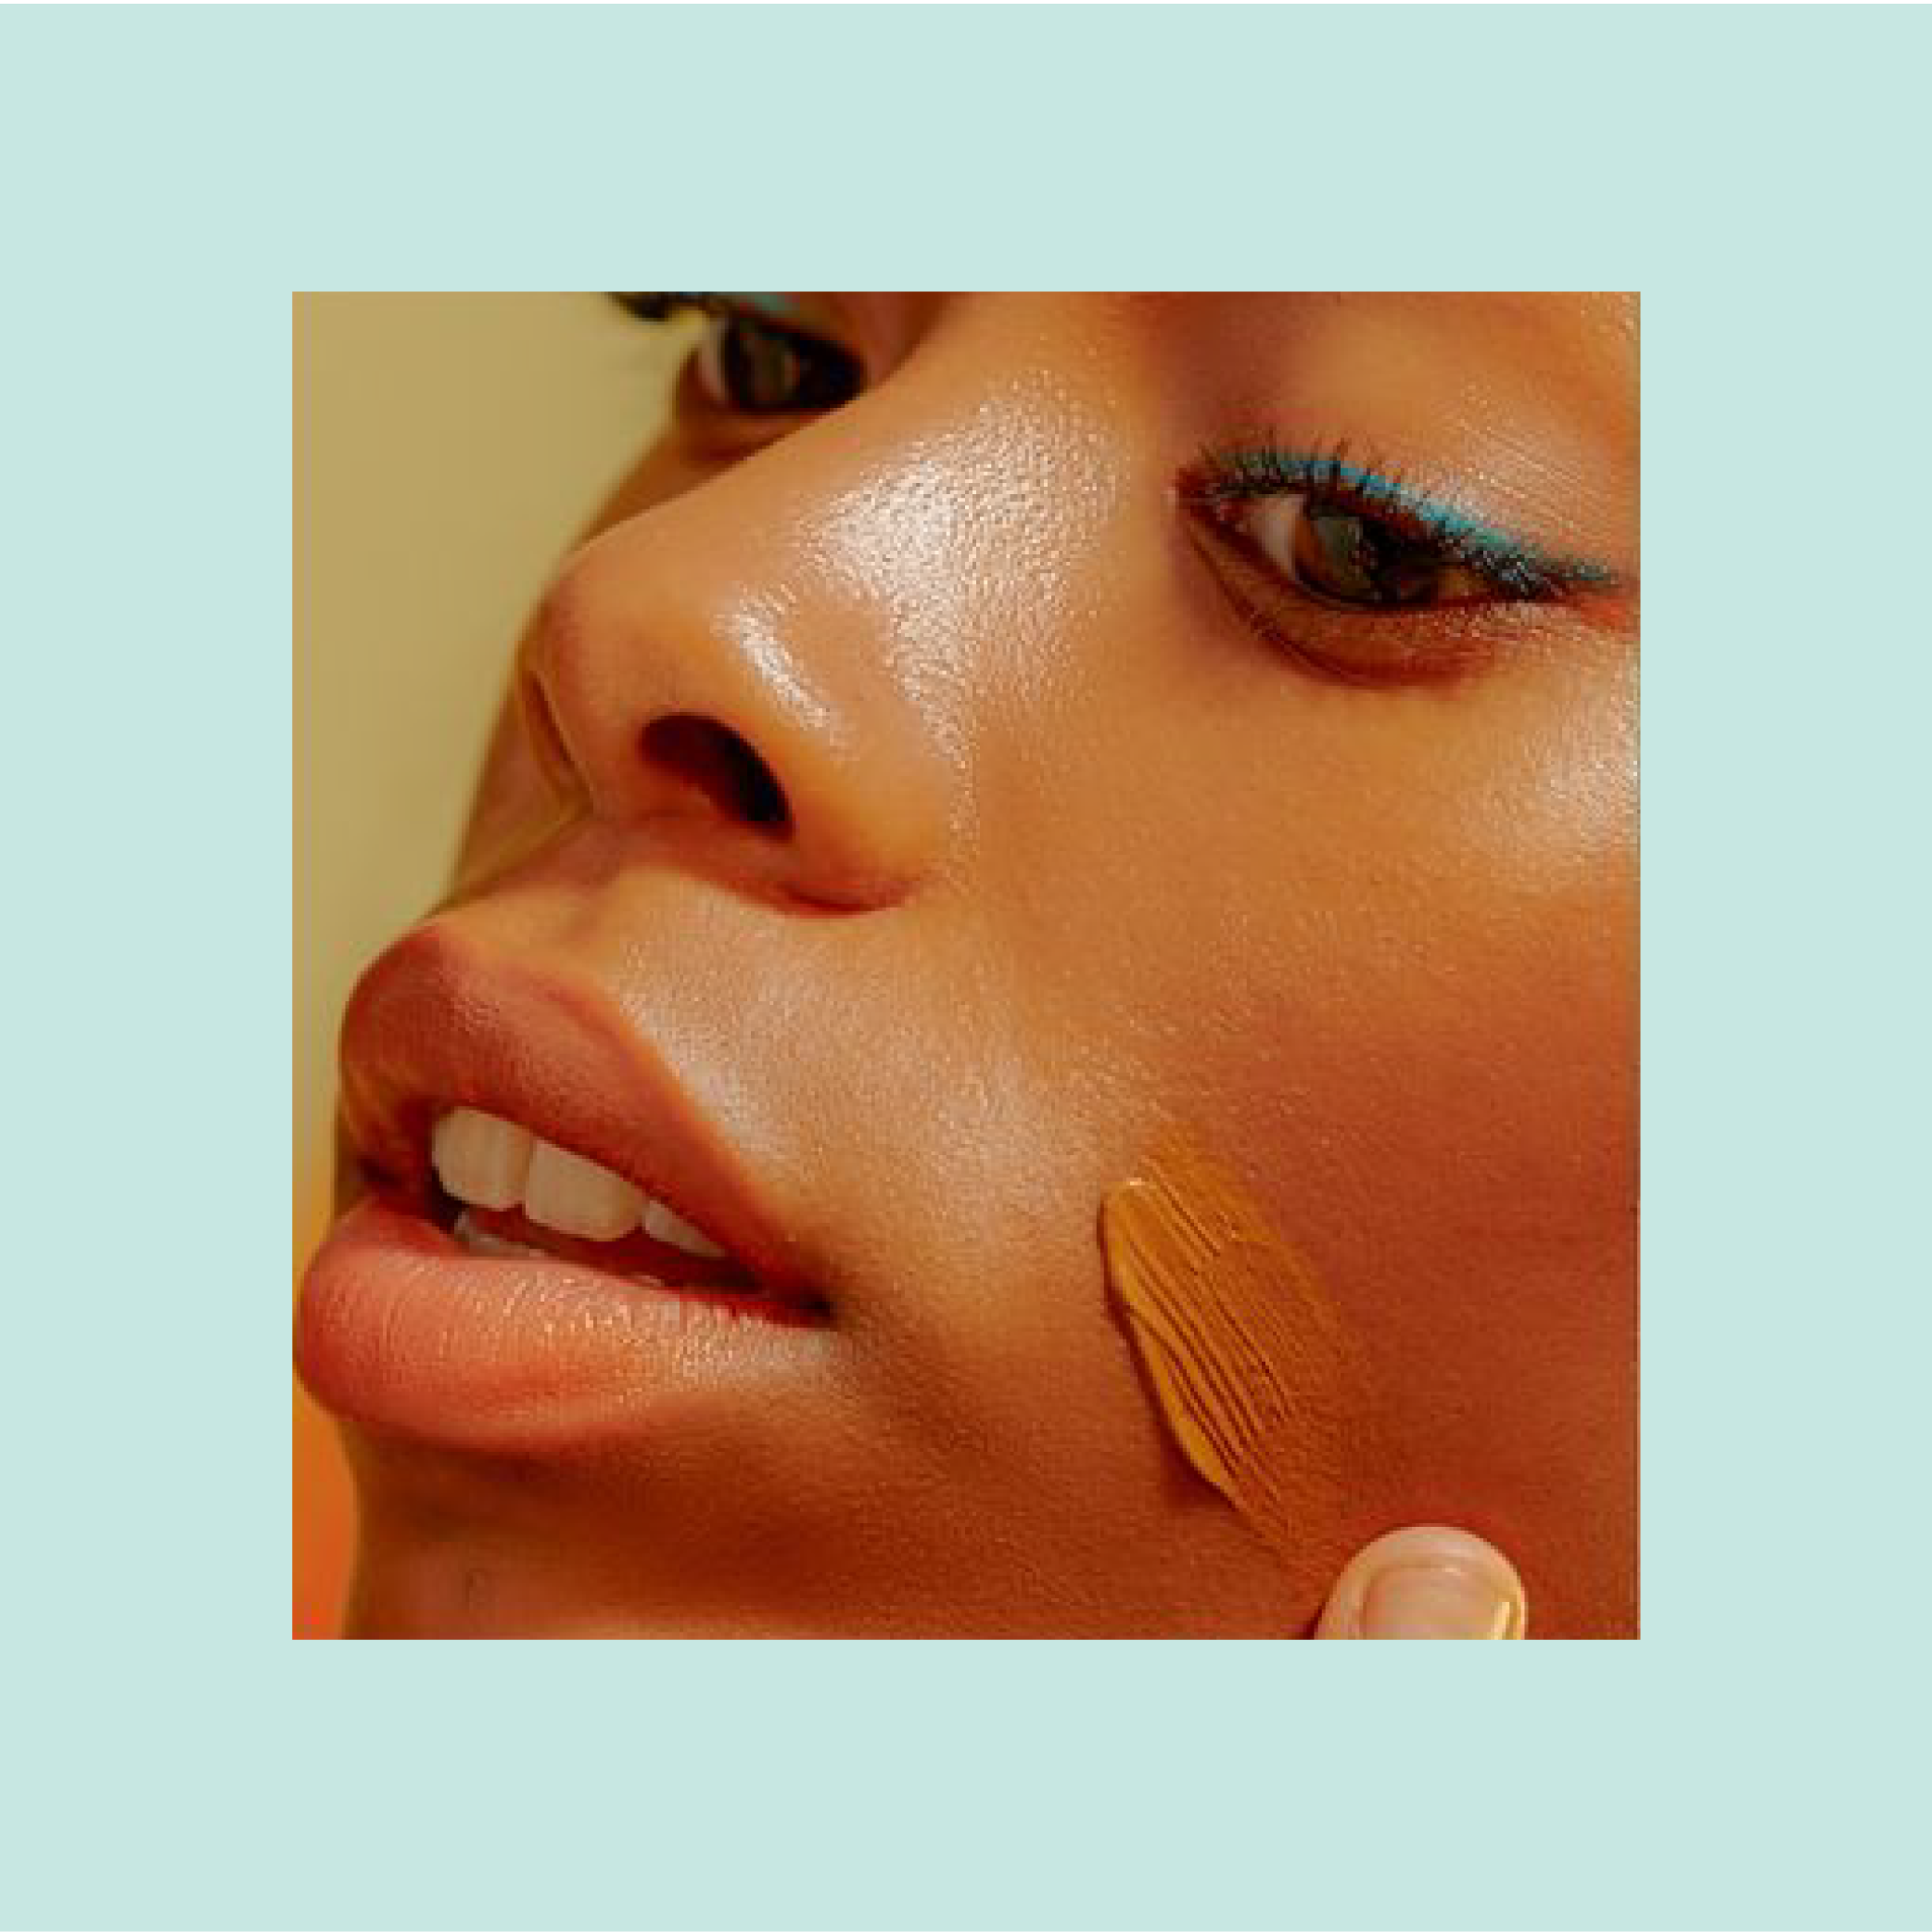 TikTok beauty hacks 2020 creating a DIY sheer tinted moisturiser pic